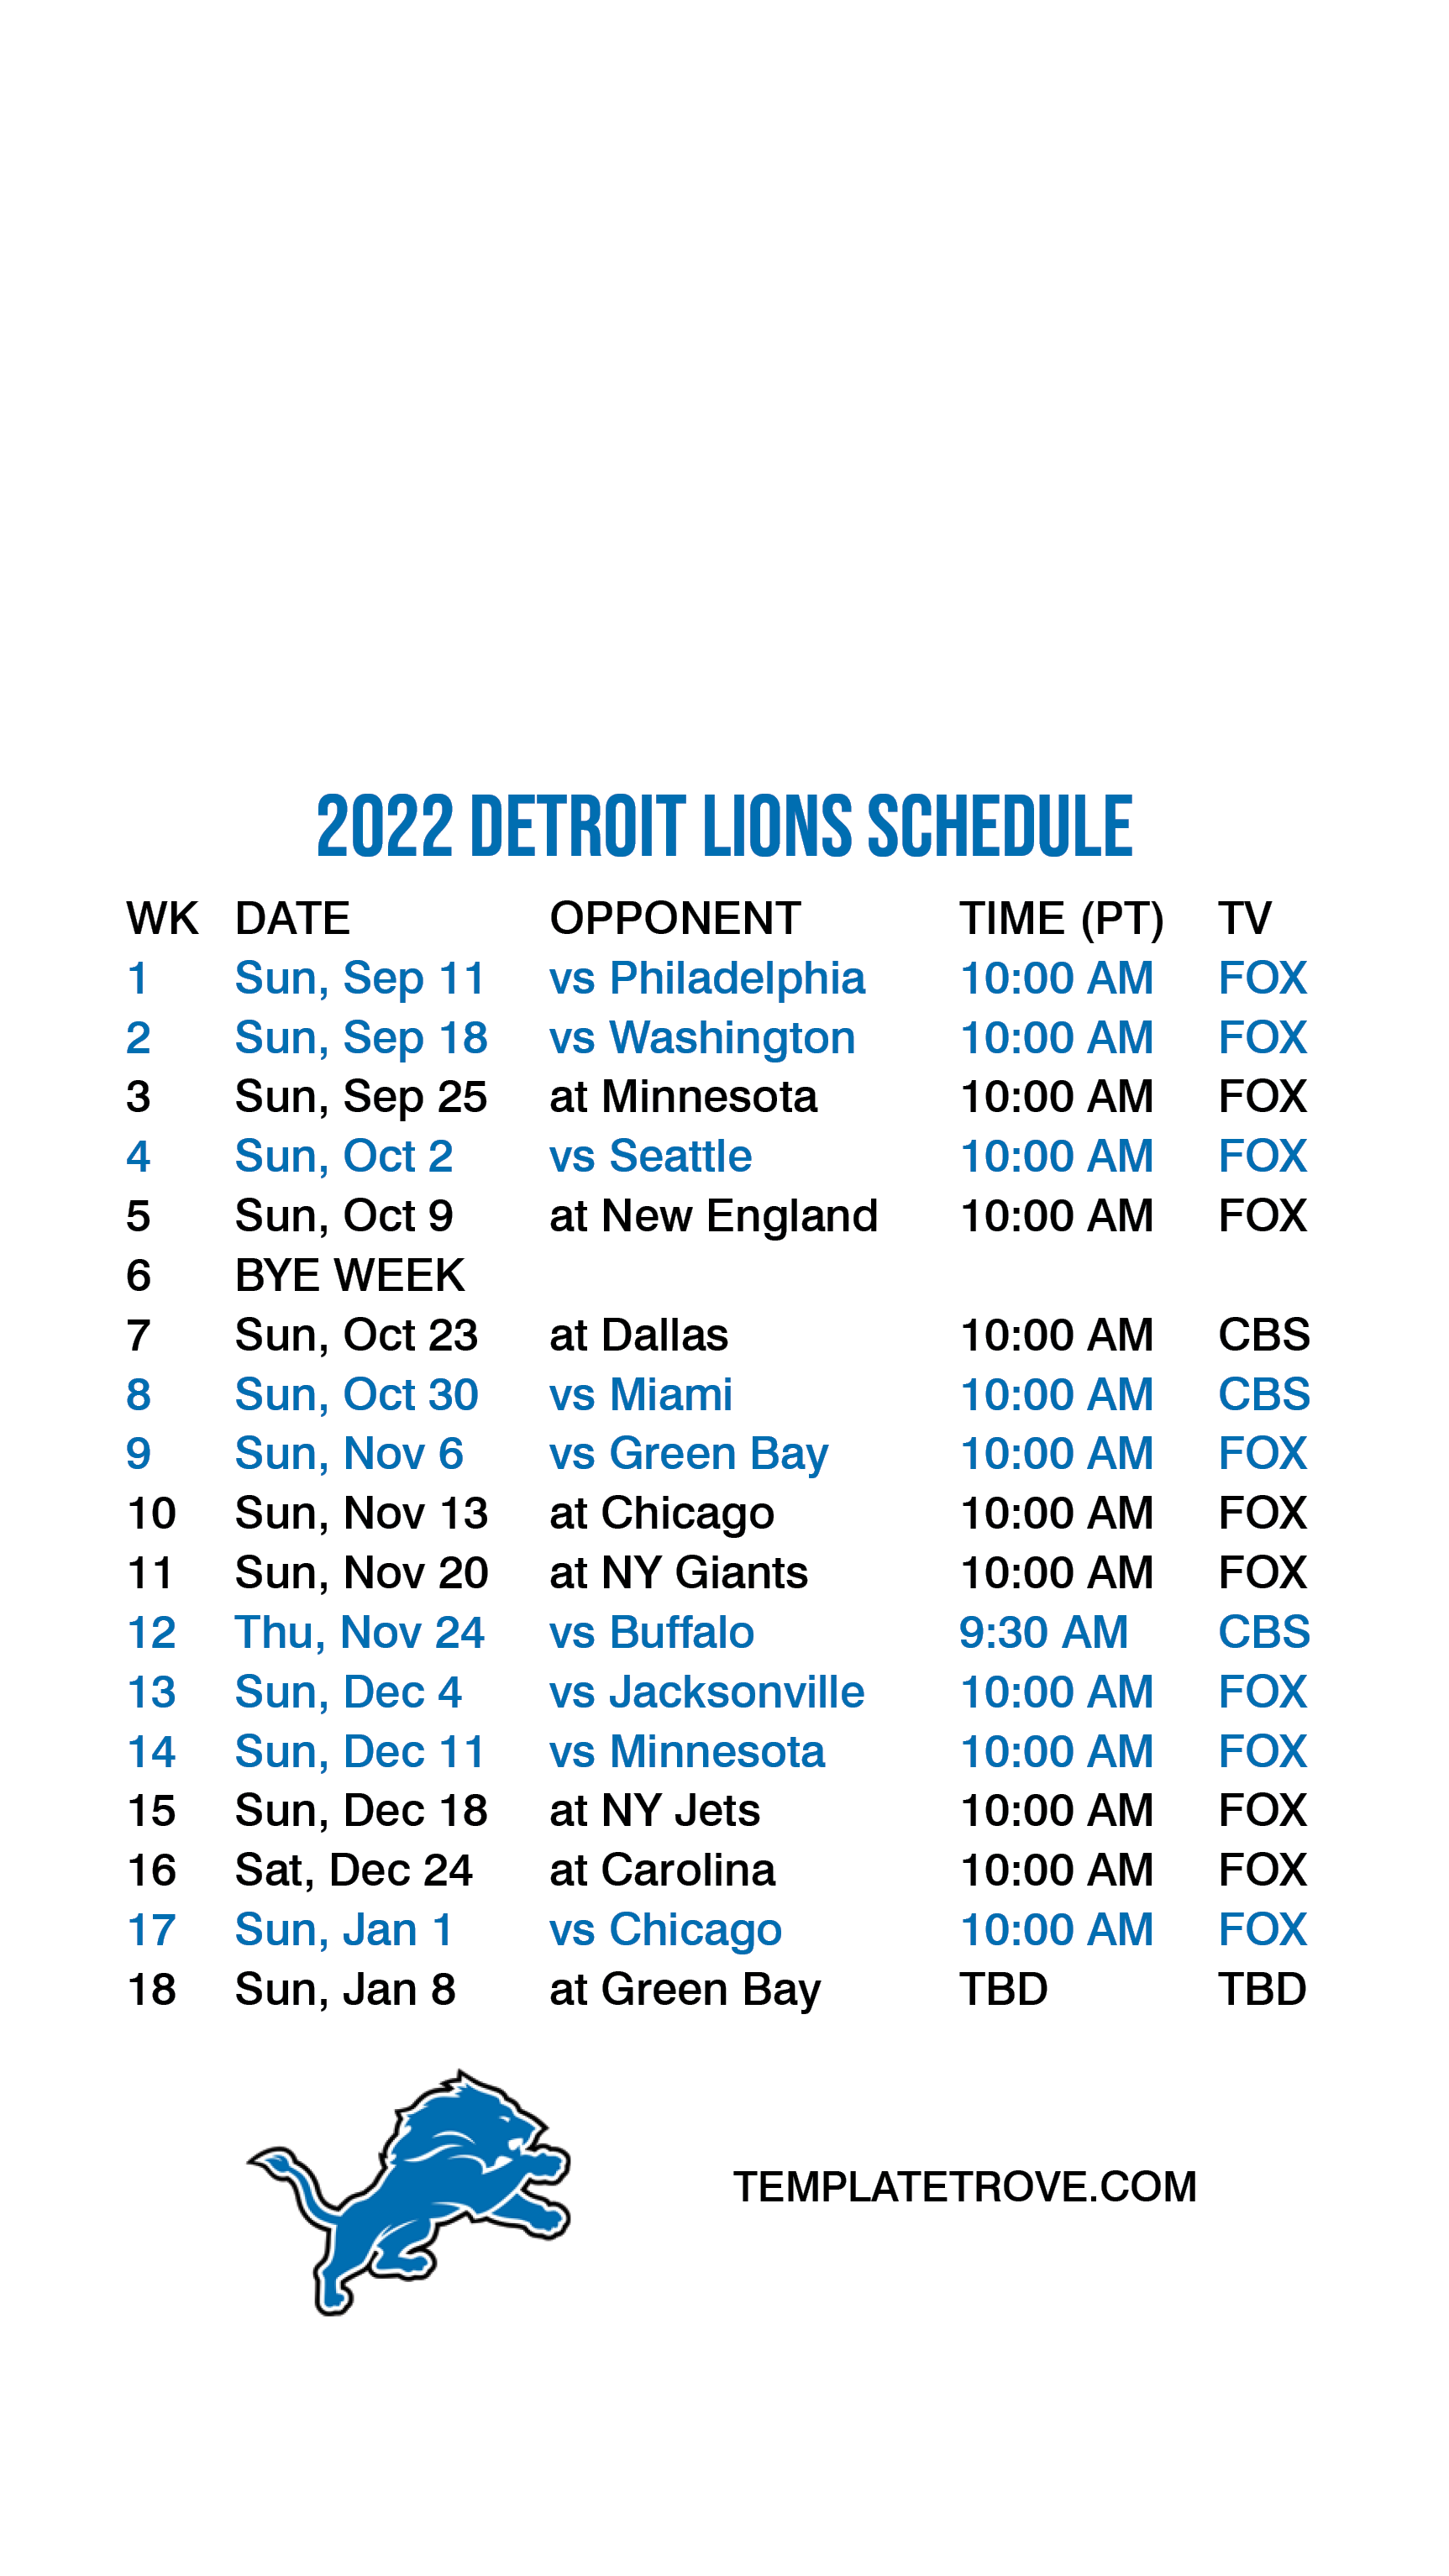 2022-2023 Detroit Lions Lock Screen Schedule for iPhone 6-7-8 Plus